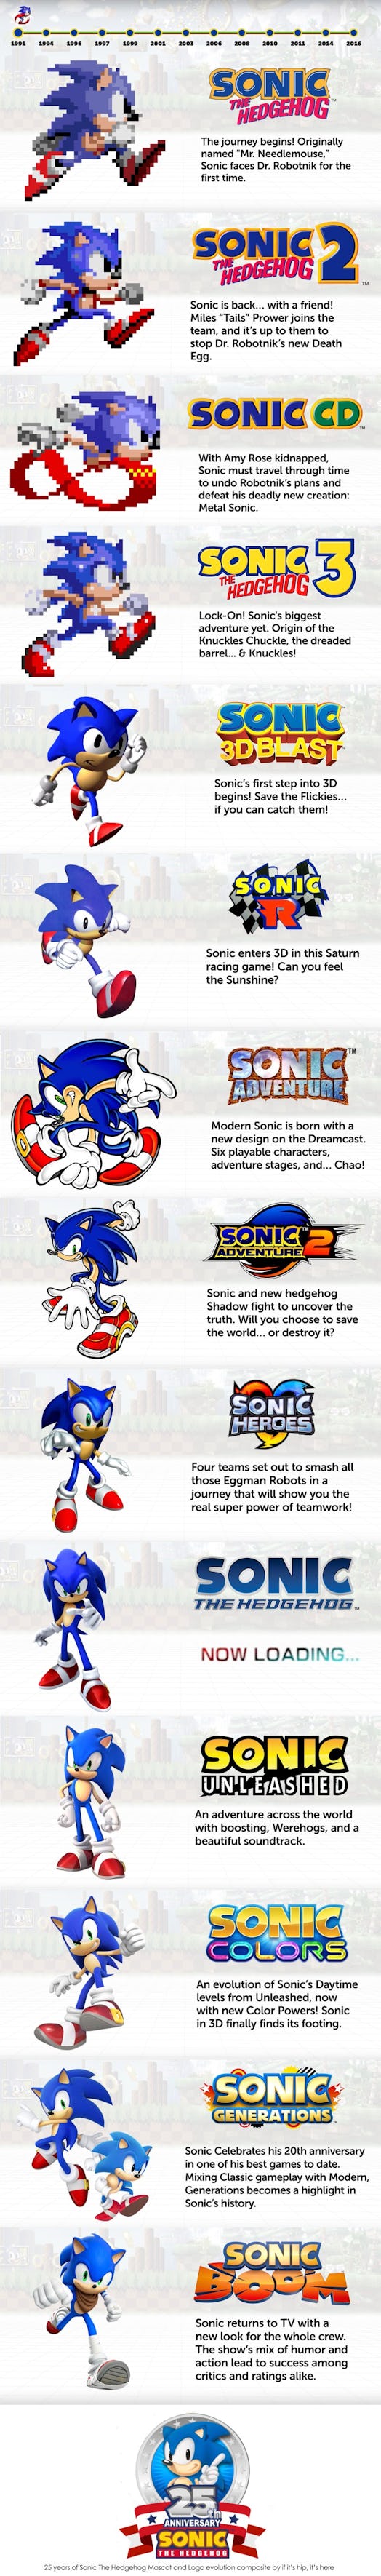 Sonic the Hedgehog Evolution